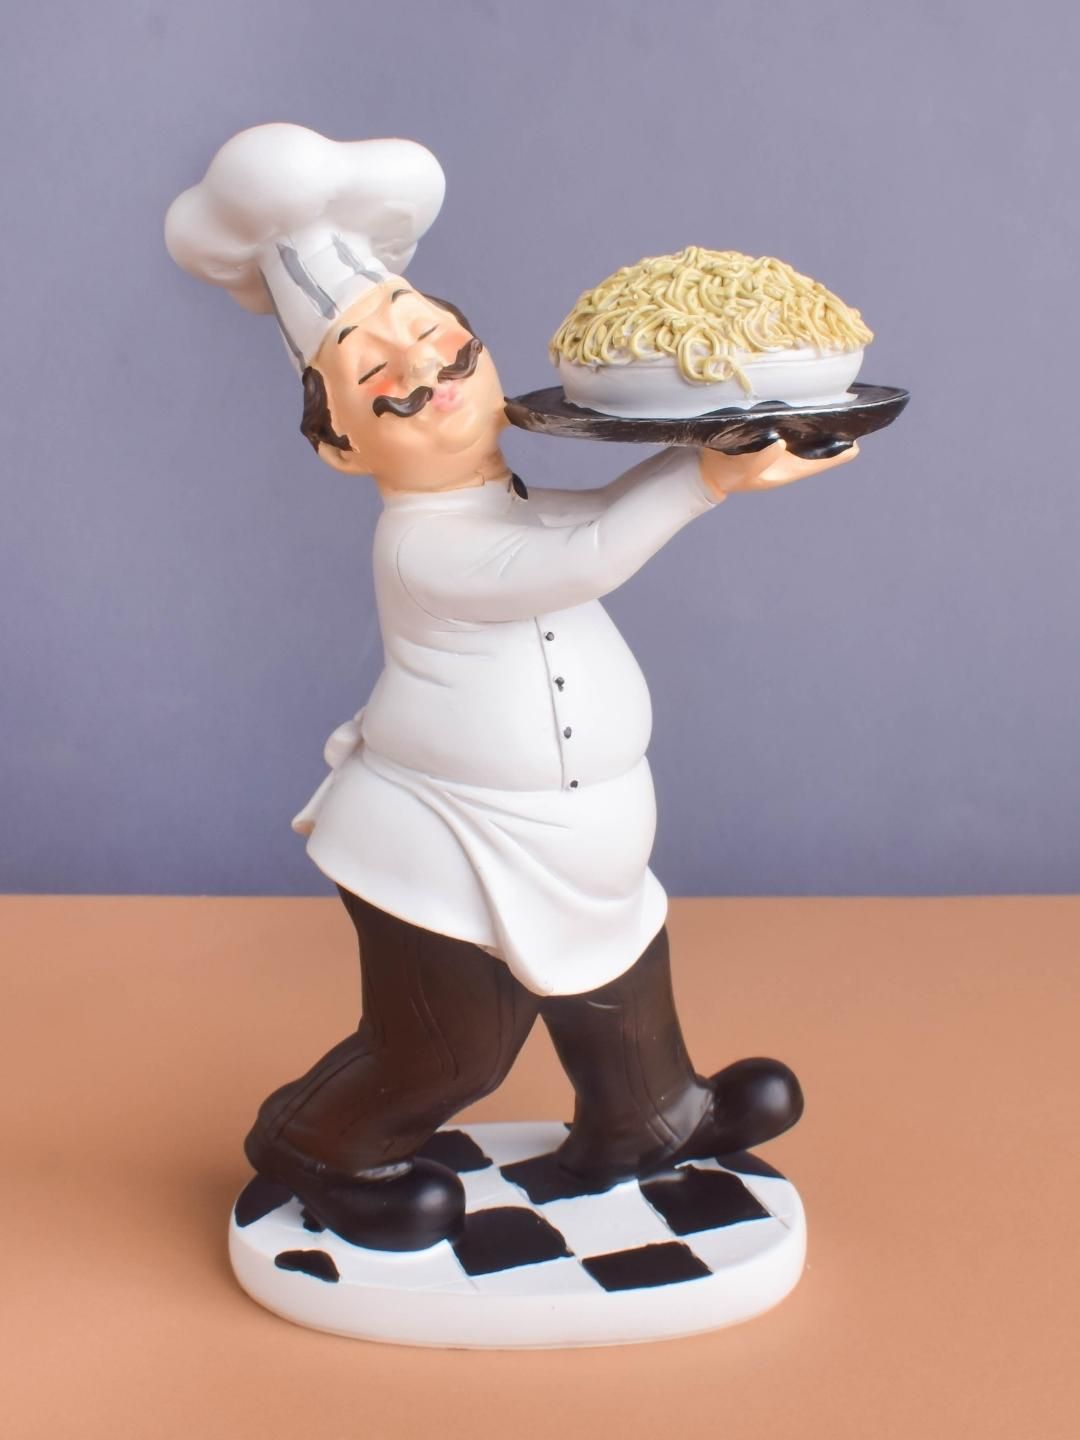 Nestasia White & Black Chef Figurine With Noodles Showpiece Price in India